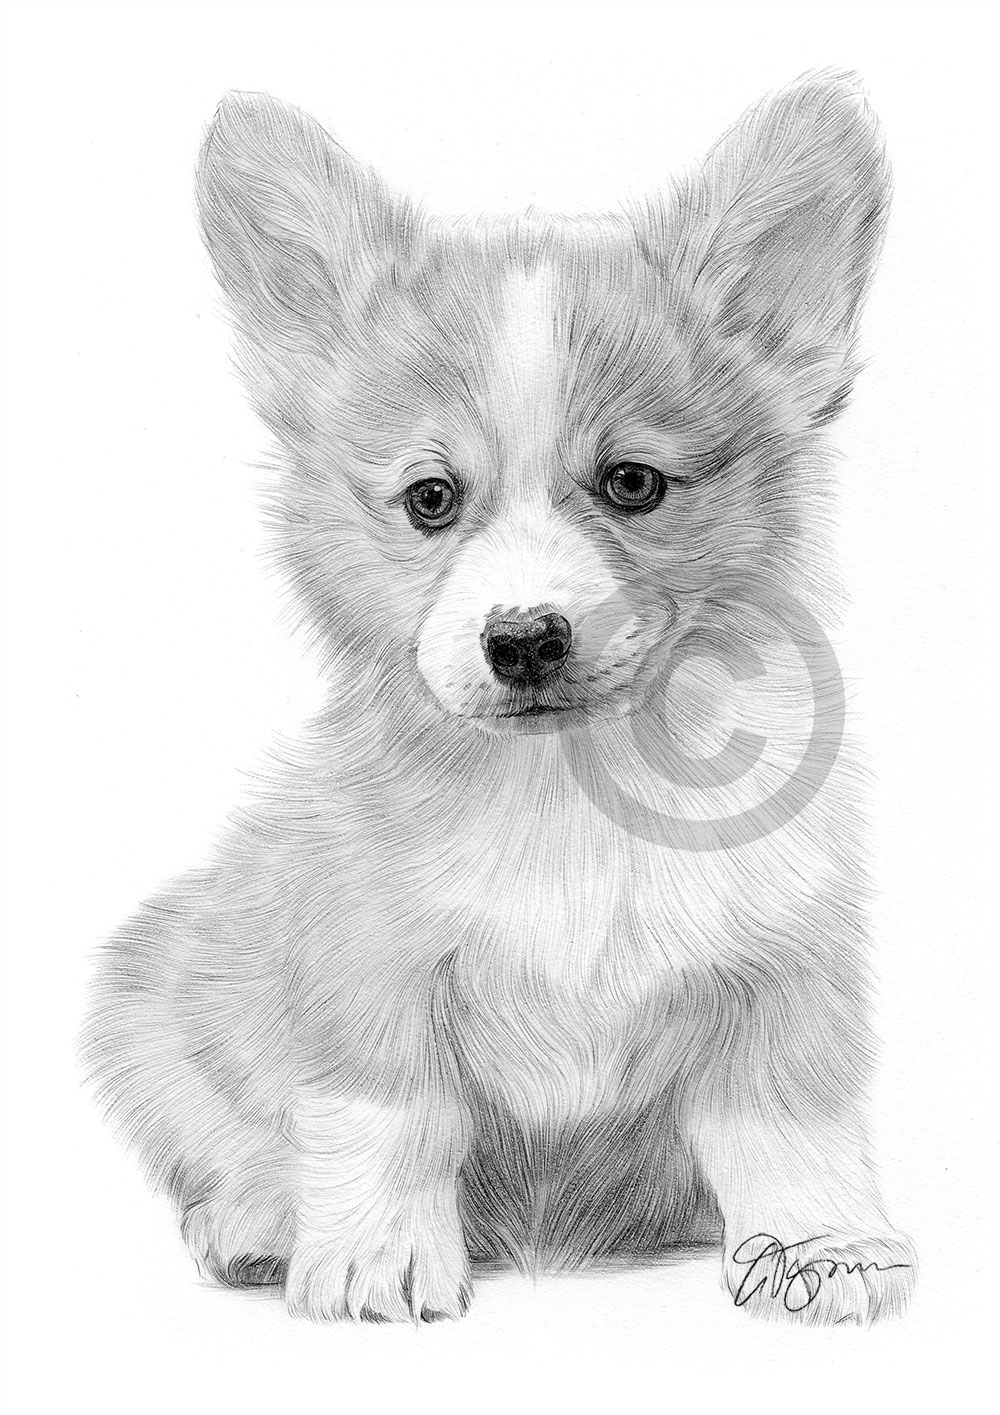 Pencil drawing of a Cardigan Corgi puppy by artist Gary Tymon